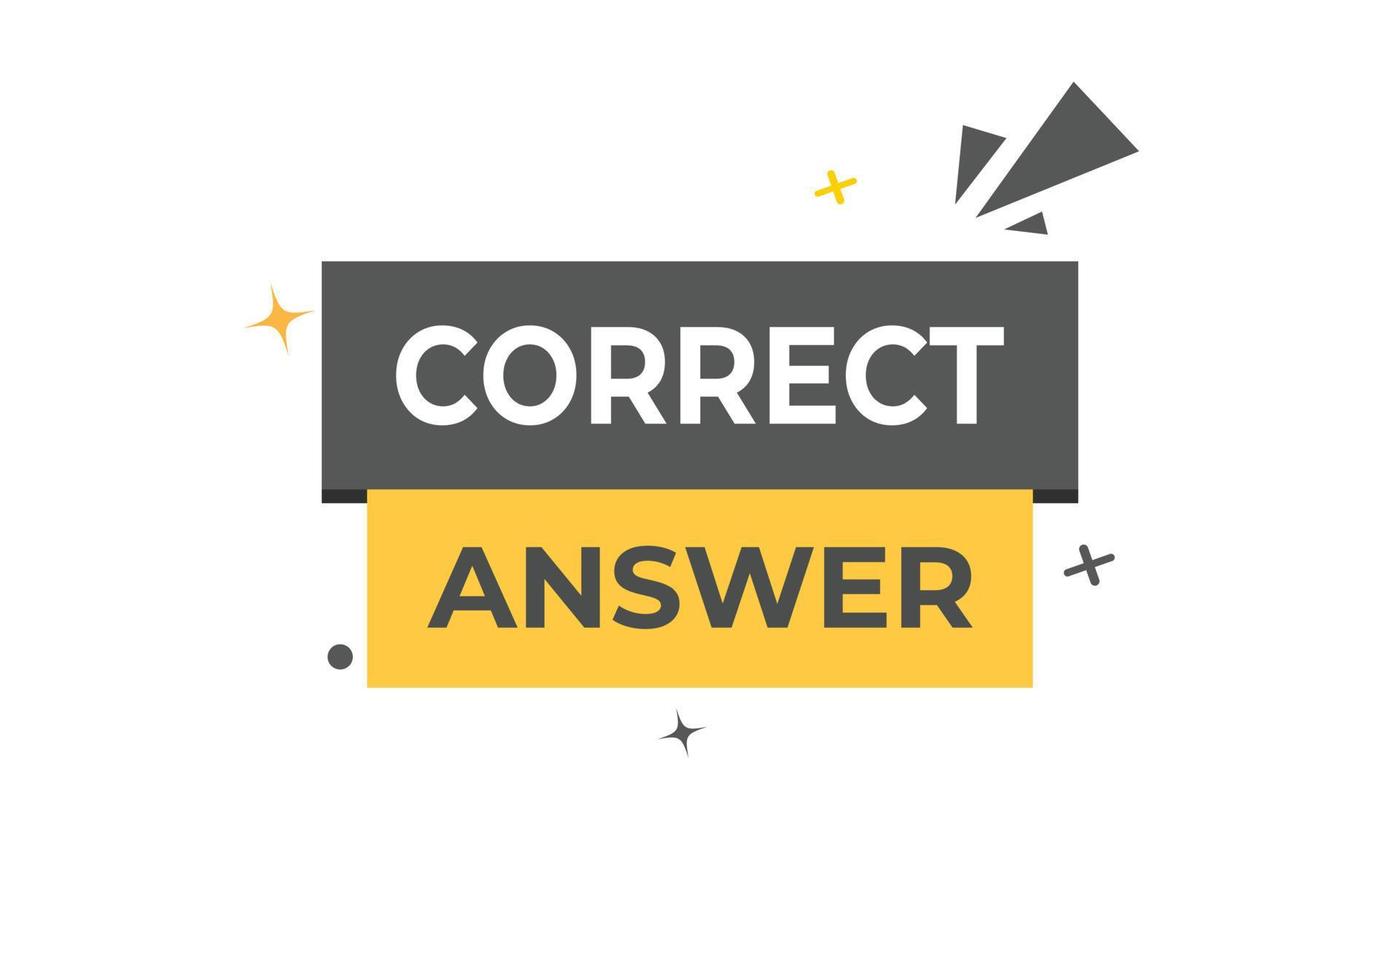 Correct Answer Button. Speech Bubble, Banner Label Correct Answer vector